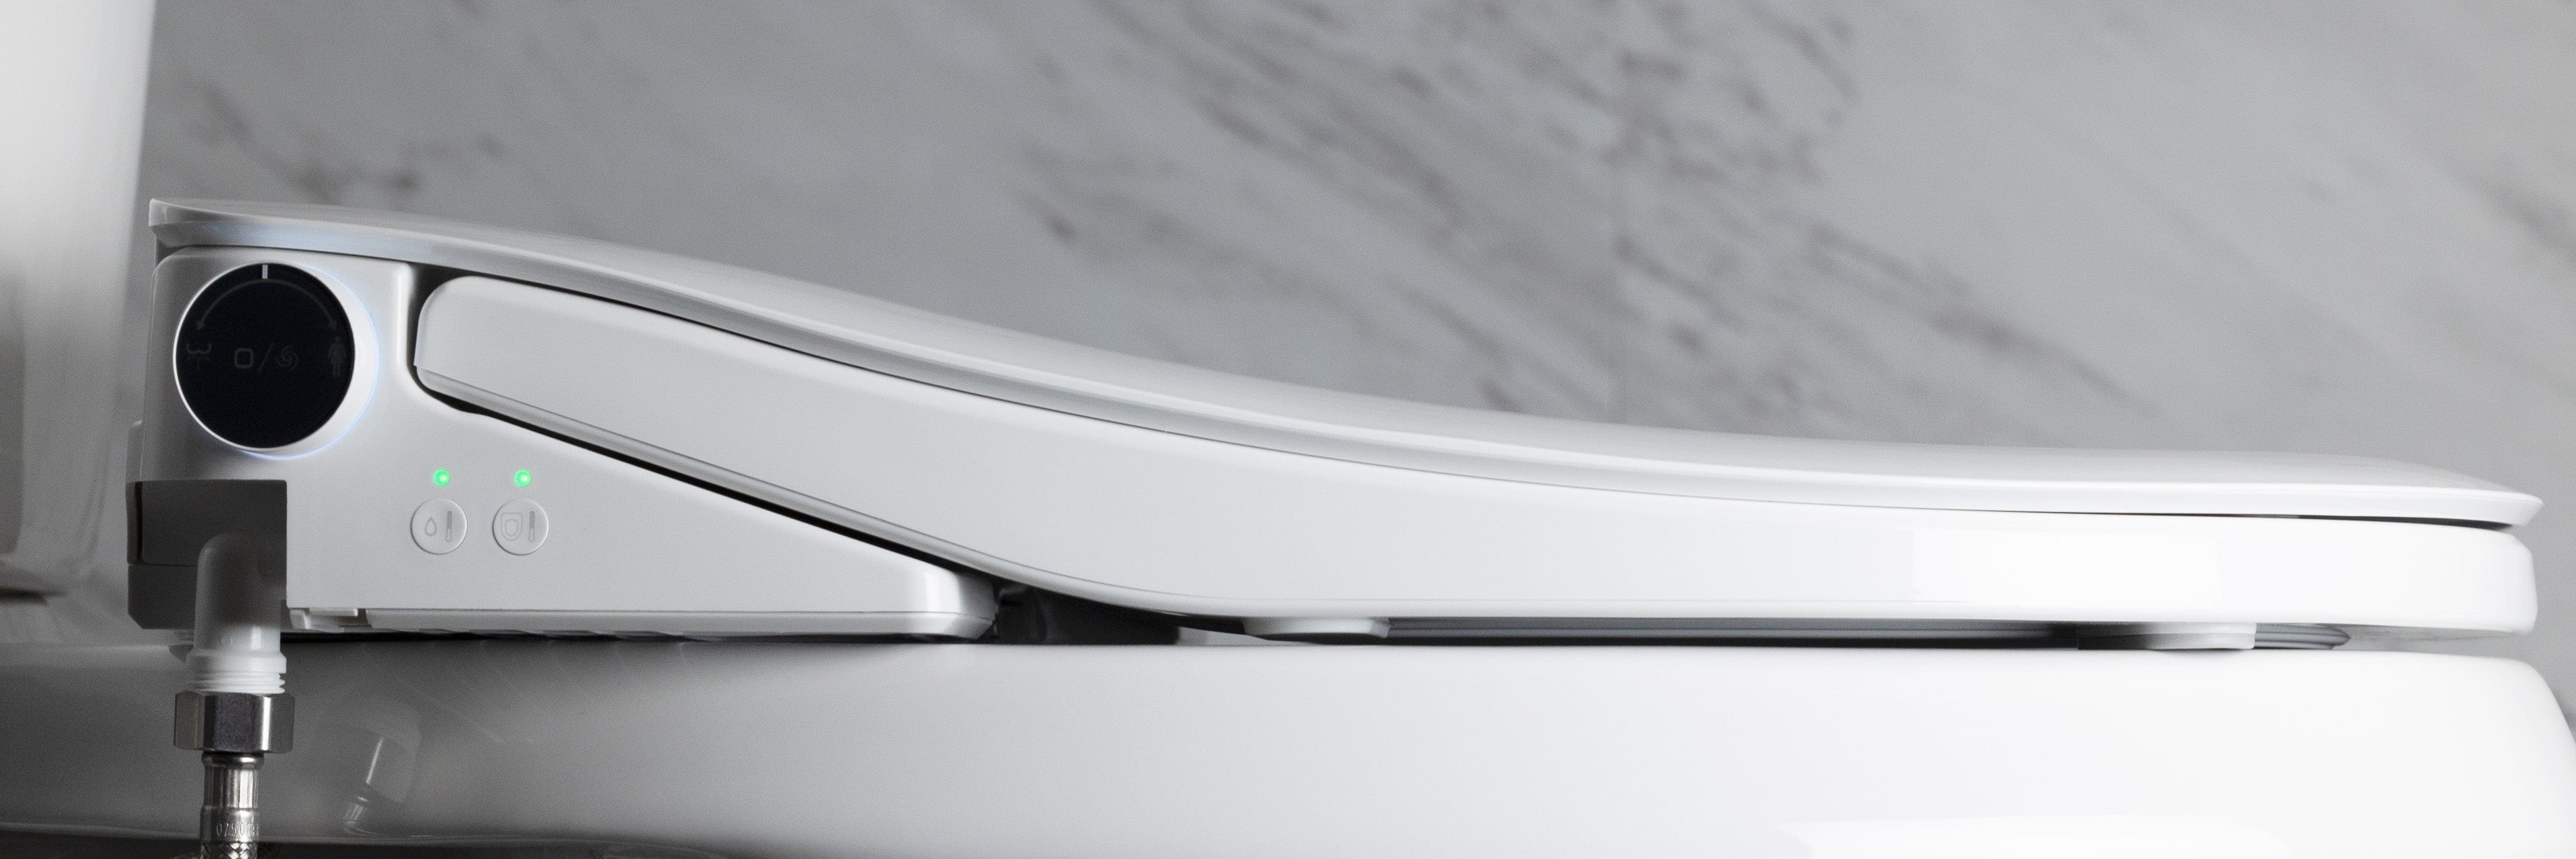 Hygiene for Health Bidet Toilet Seat Ultra-Nova Bidet Seat